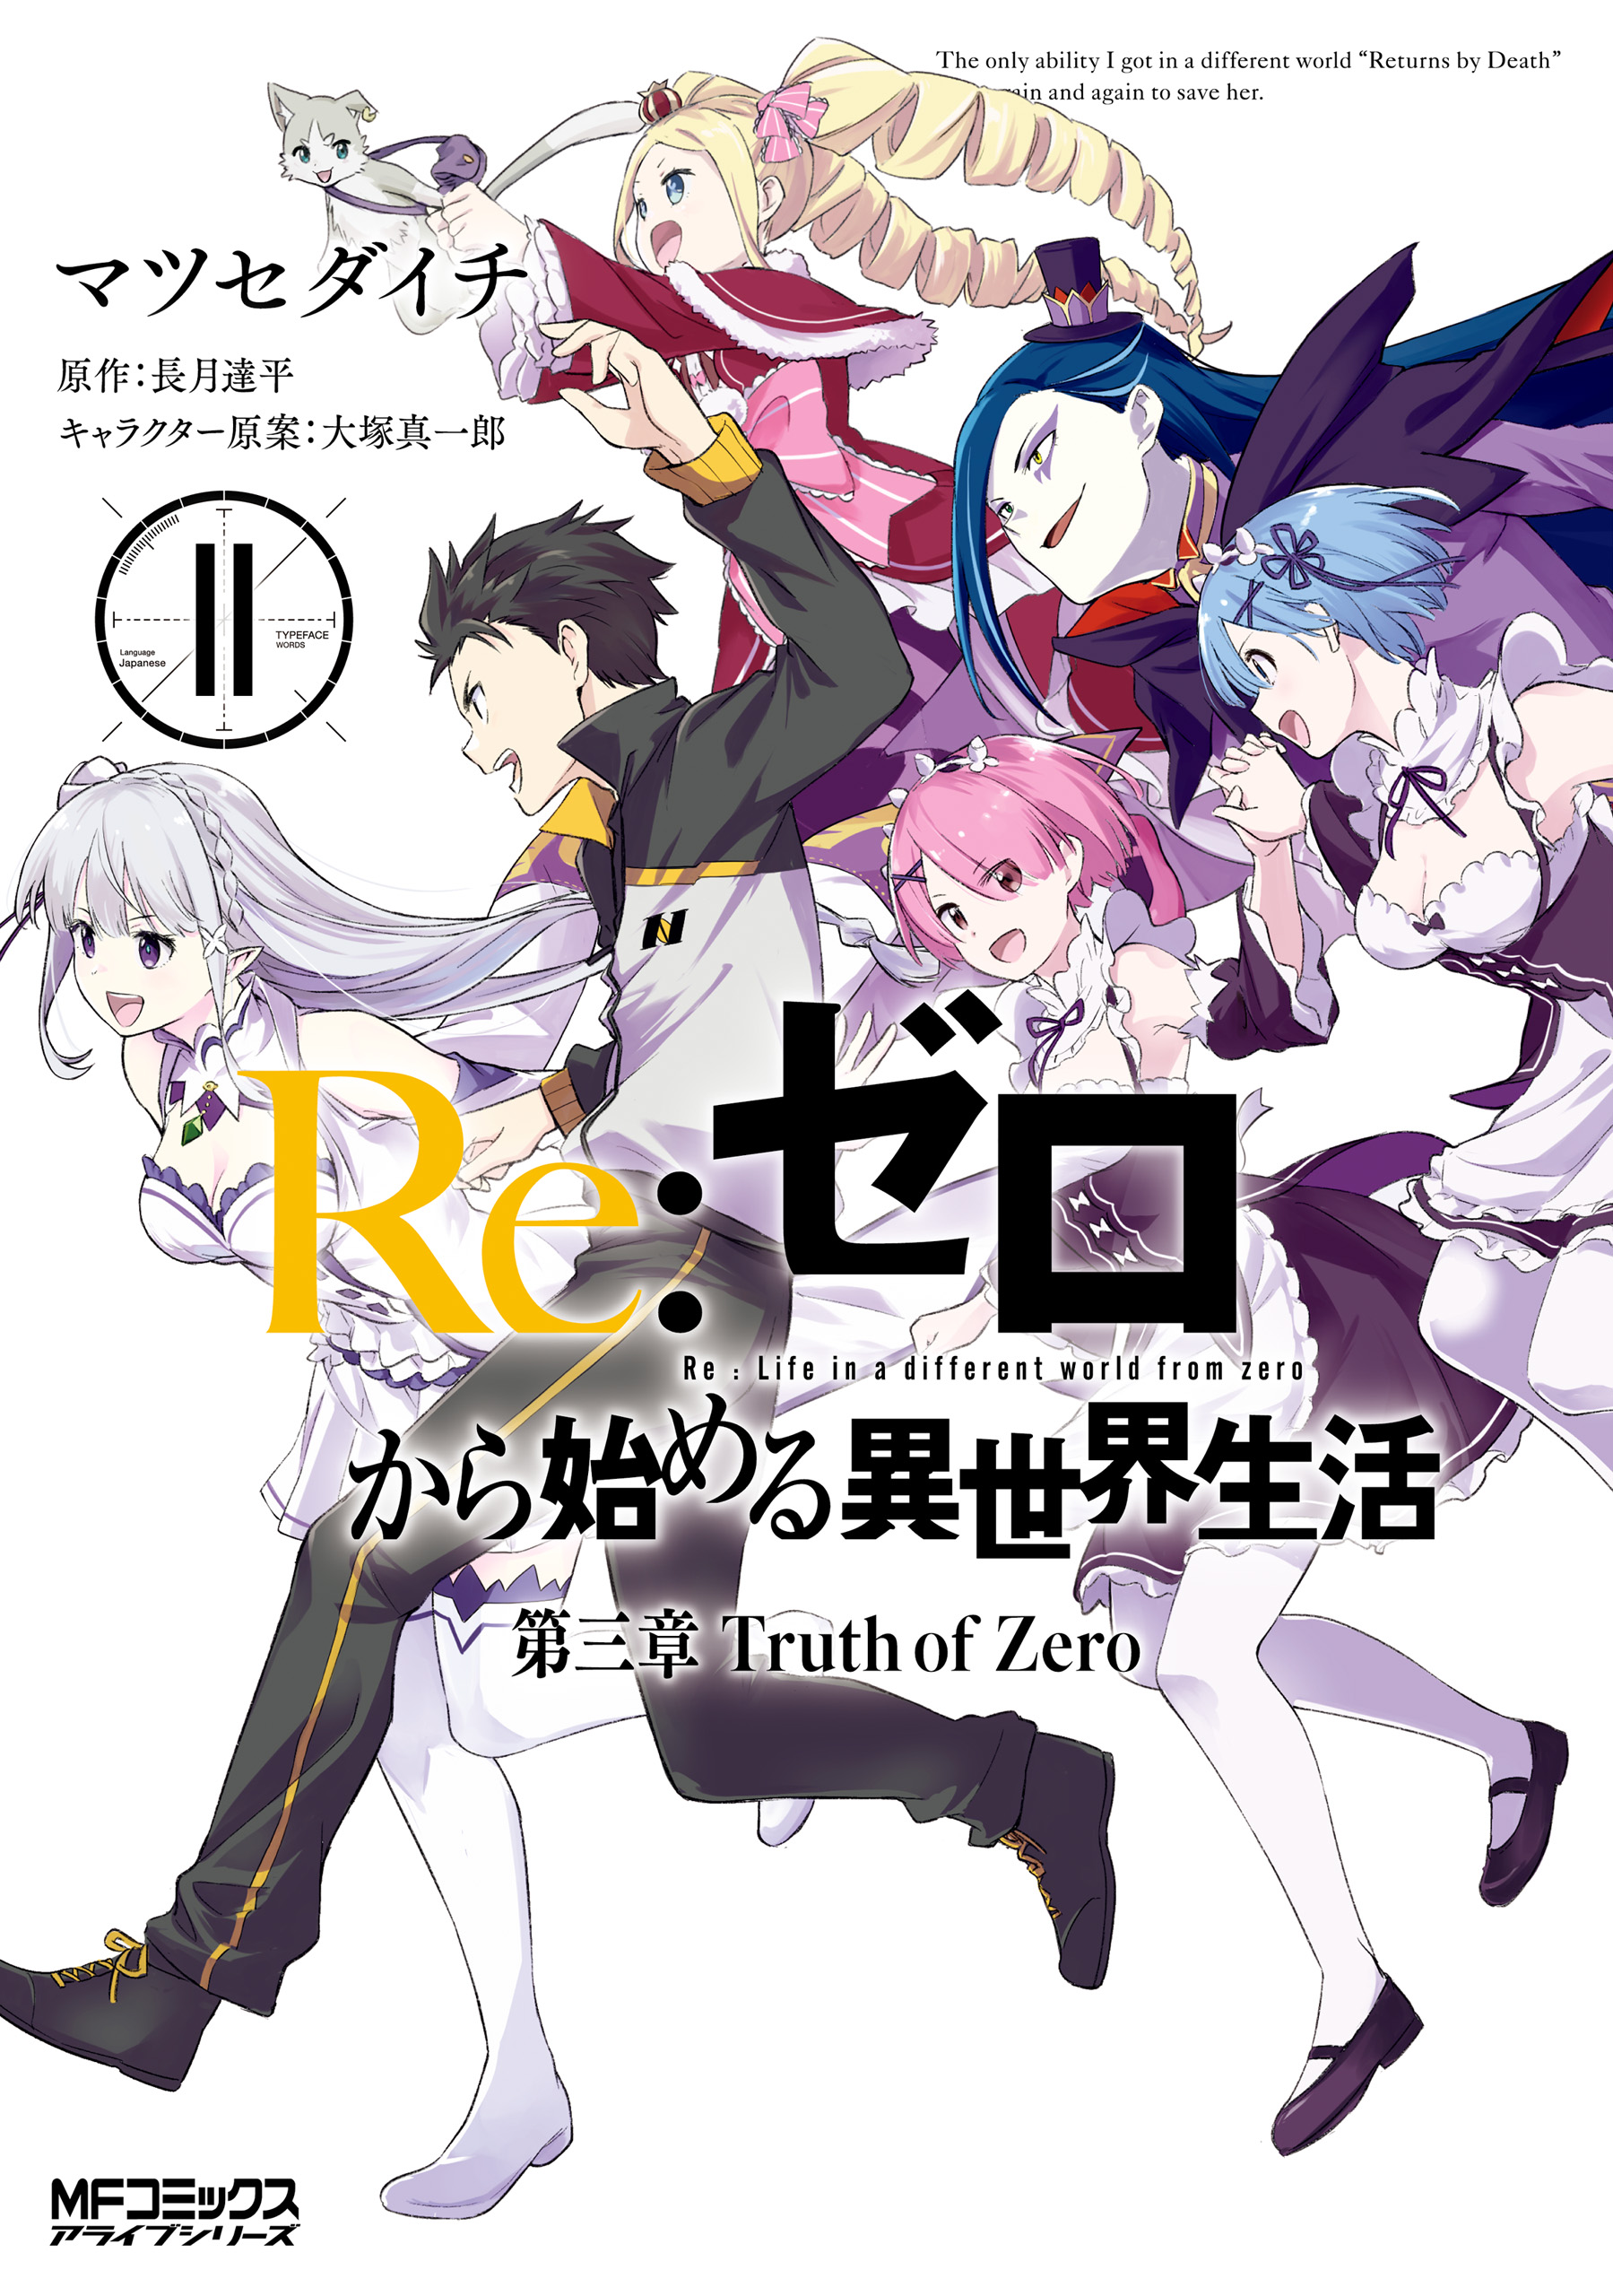 Re:Zero (season 2) - Wikipedia